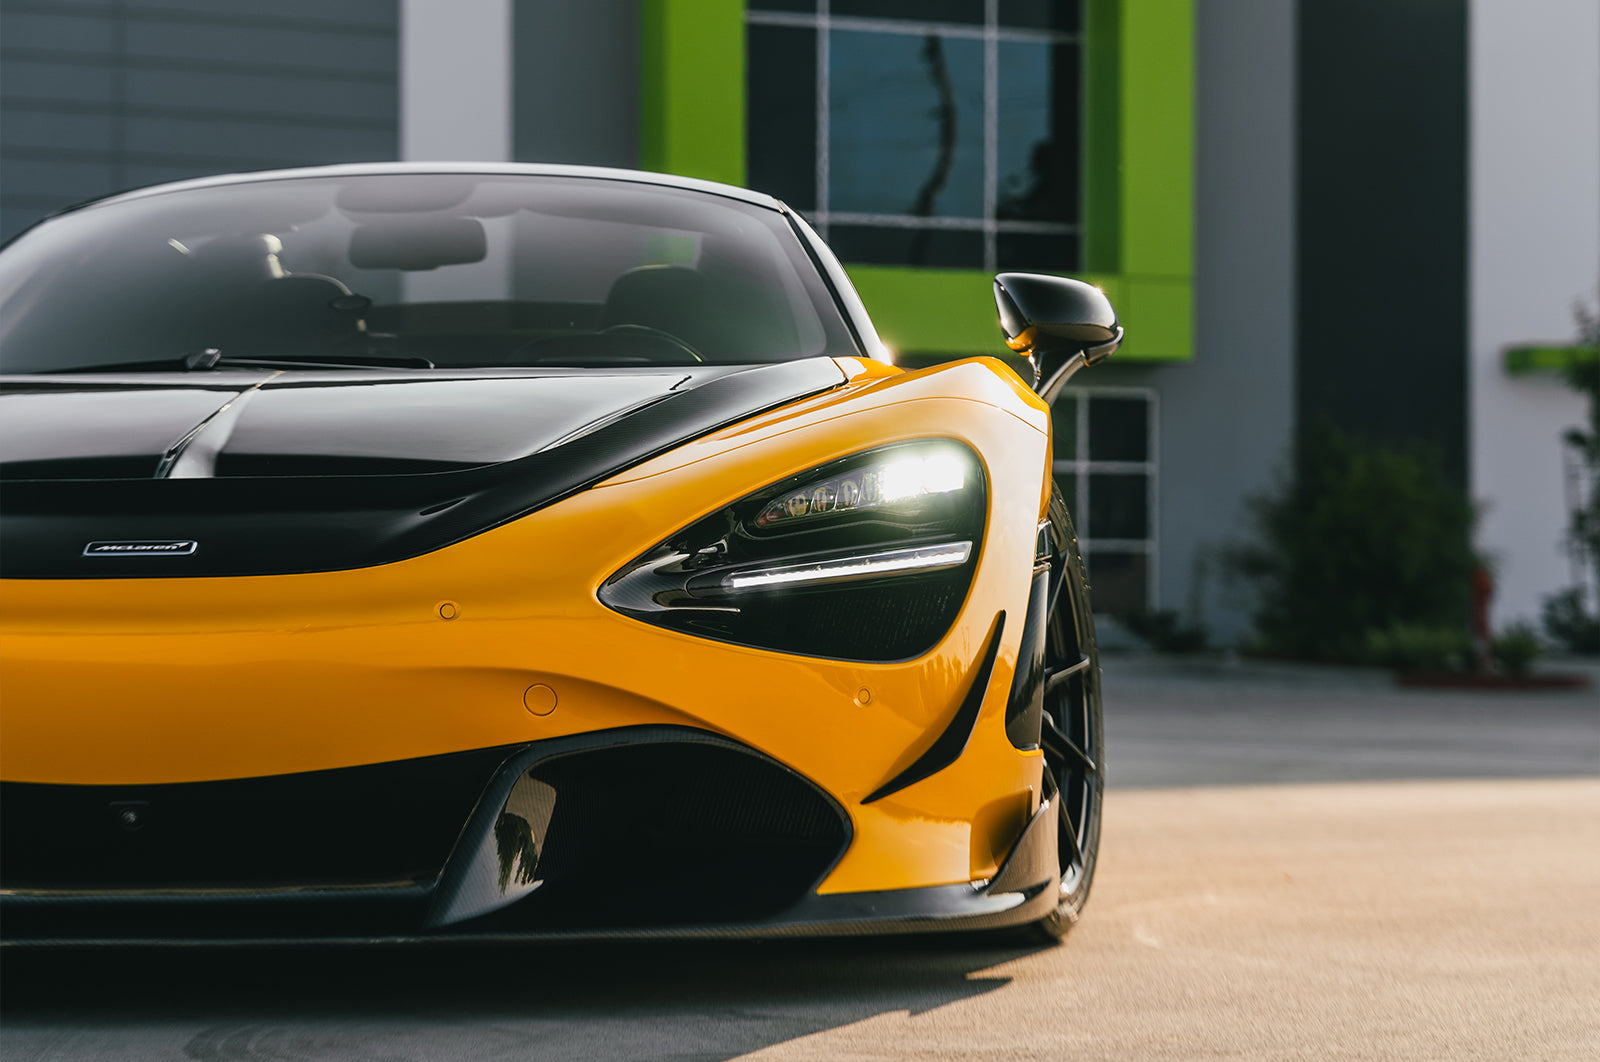 McLaren 720S - Supergloss Metallic Dandelion Yellow